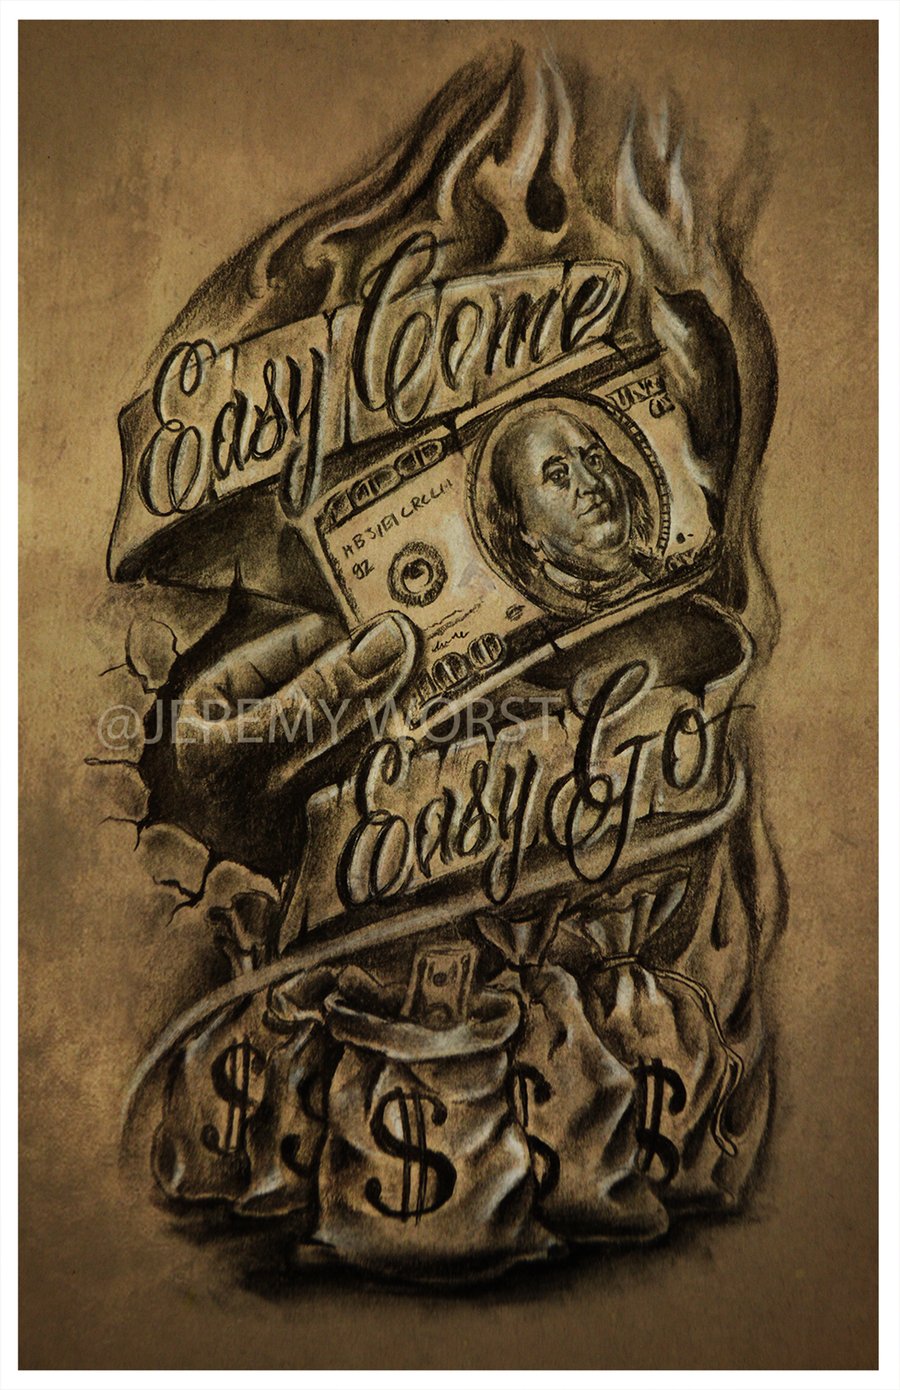 Image of Jeremy Worst "Easy Come Easy go" Sketch artwork tattoo money design graphic